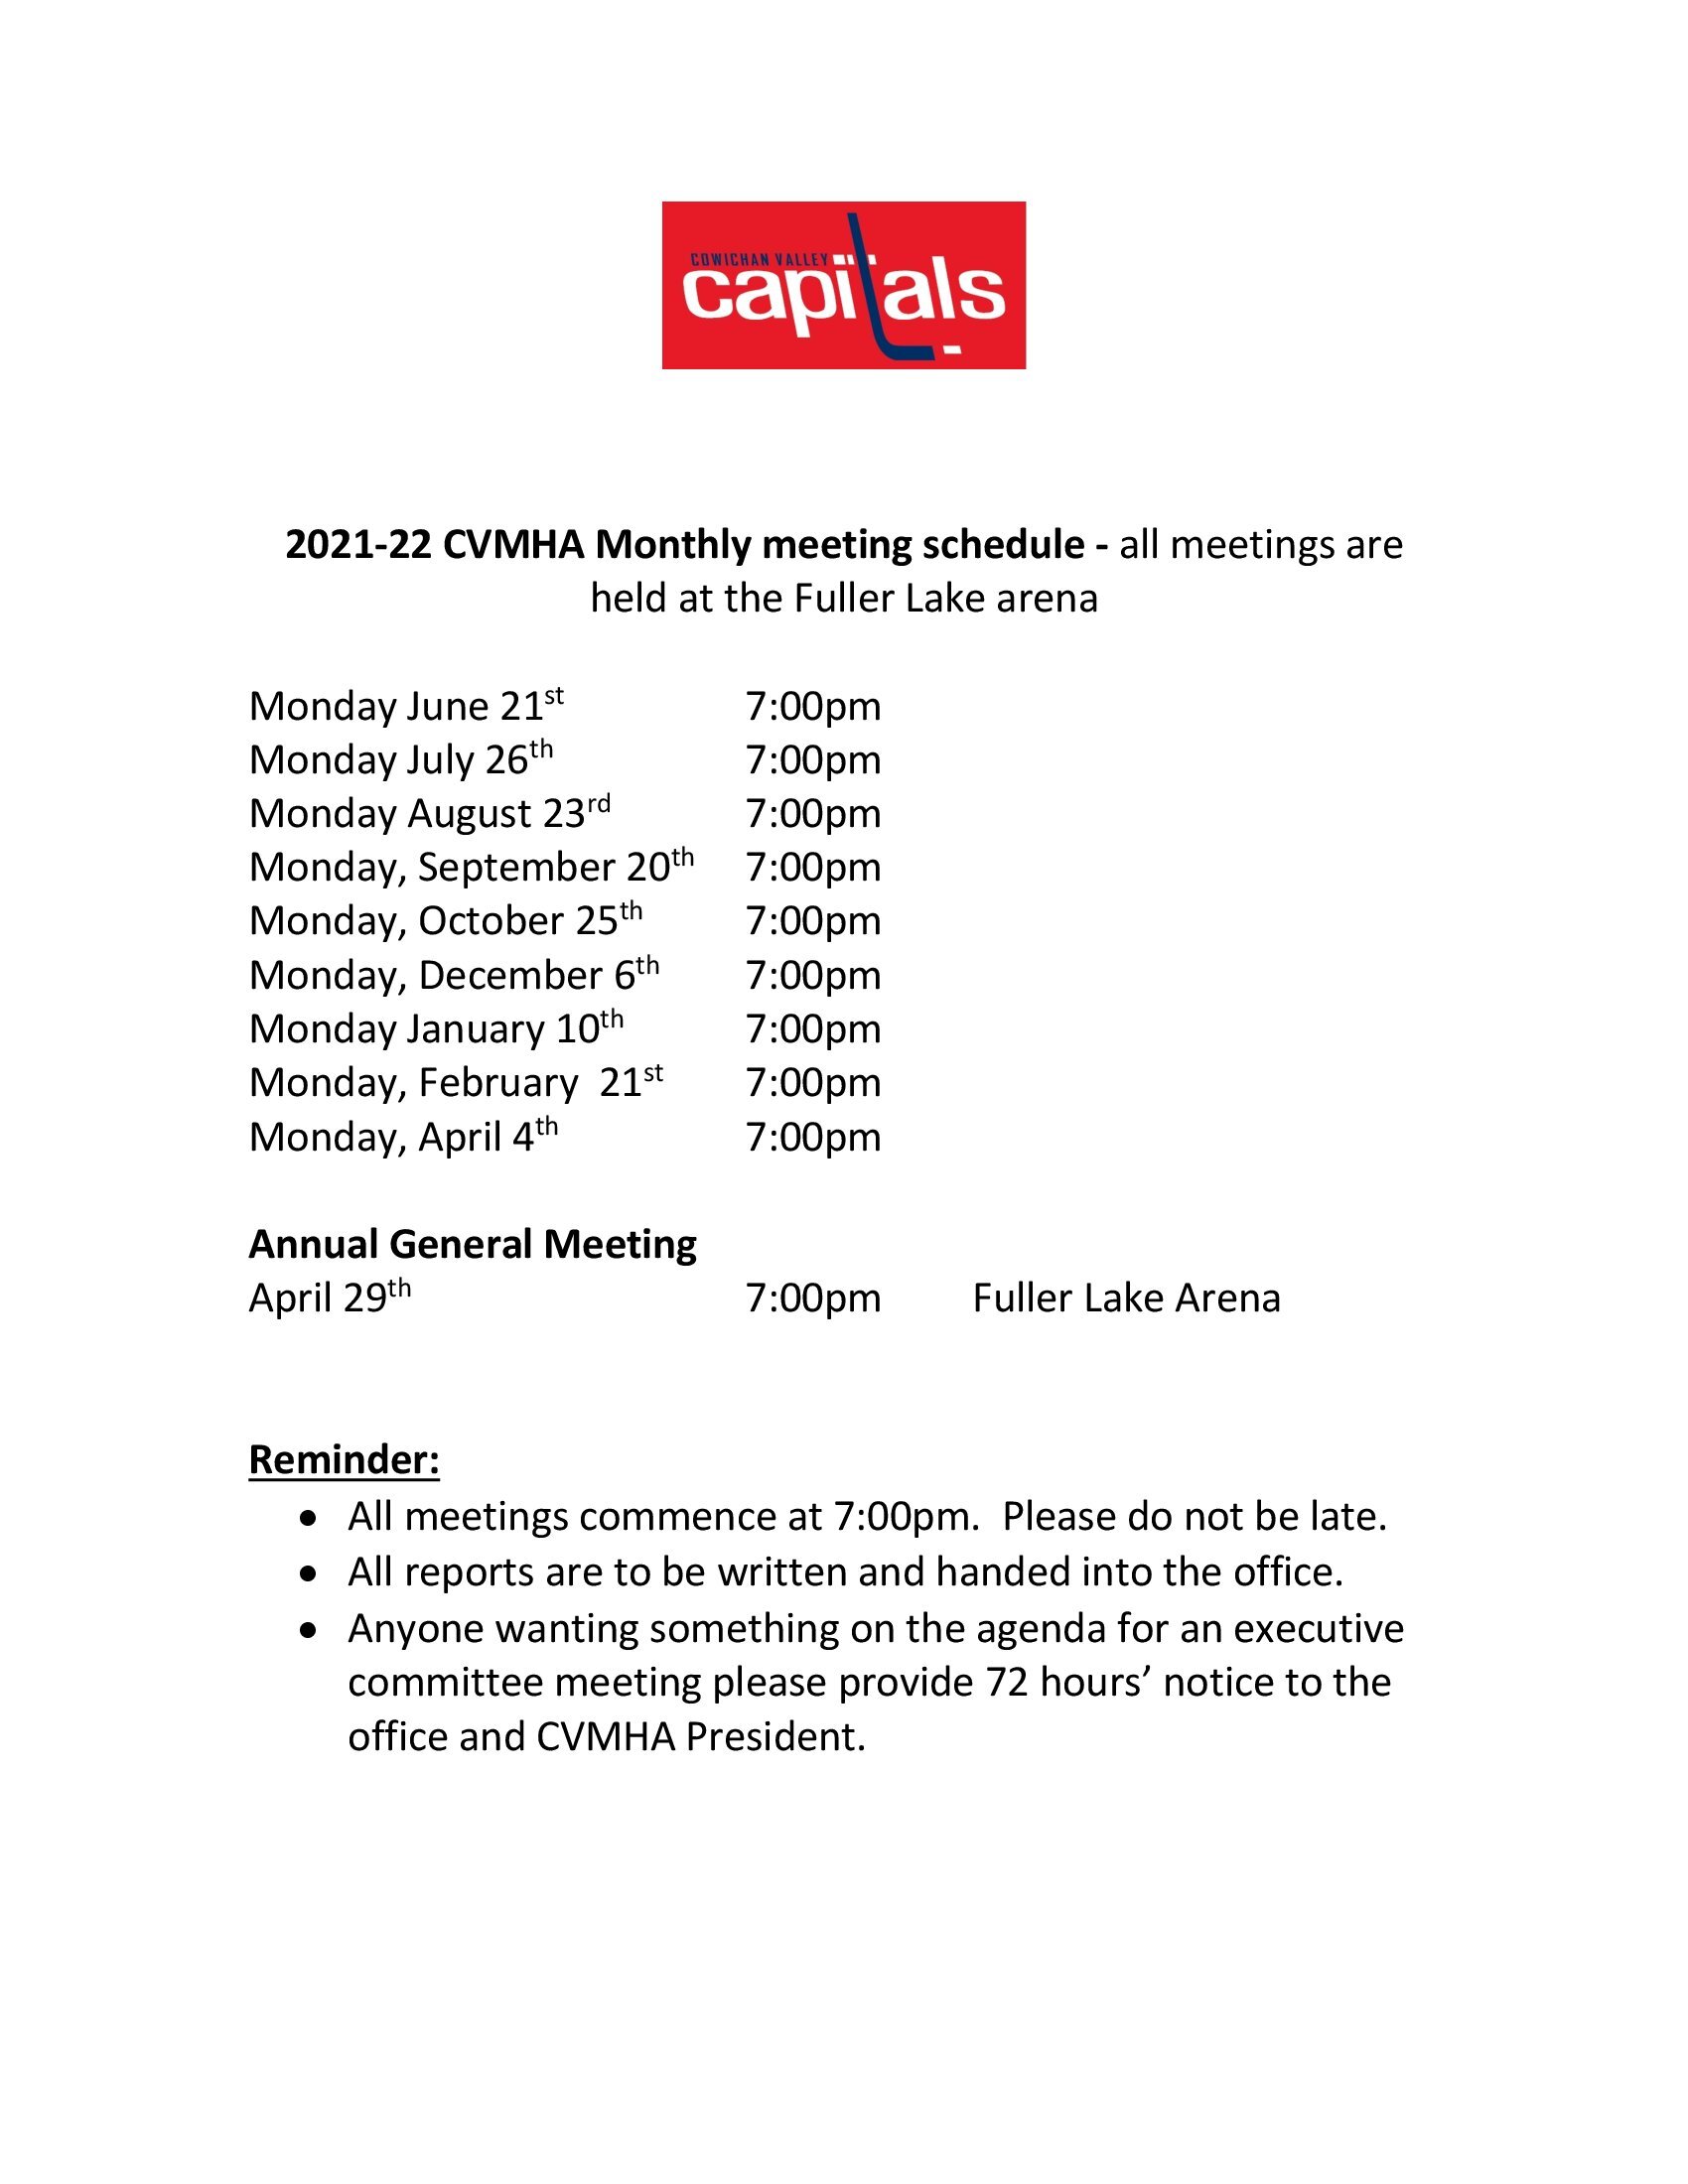 2021-2022 Schedule of Executive Meetings